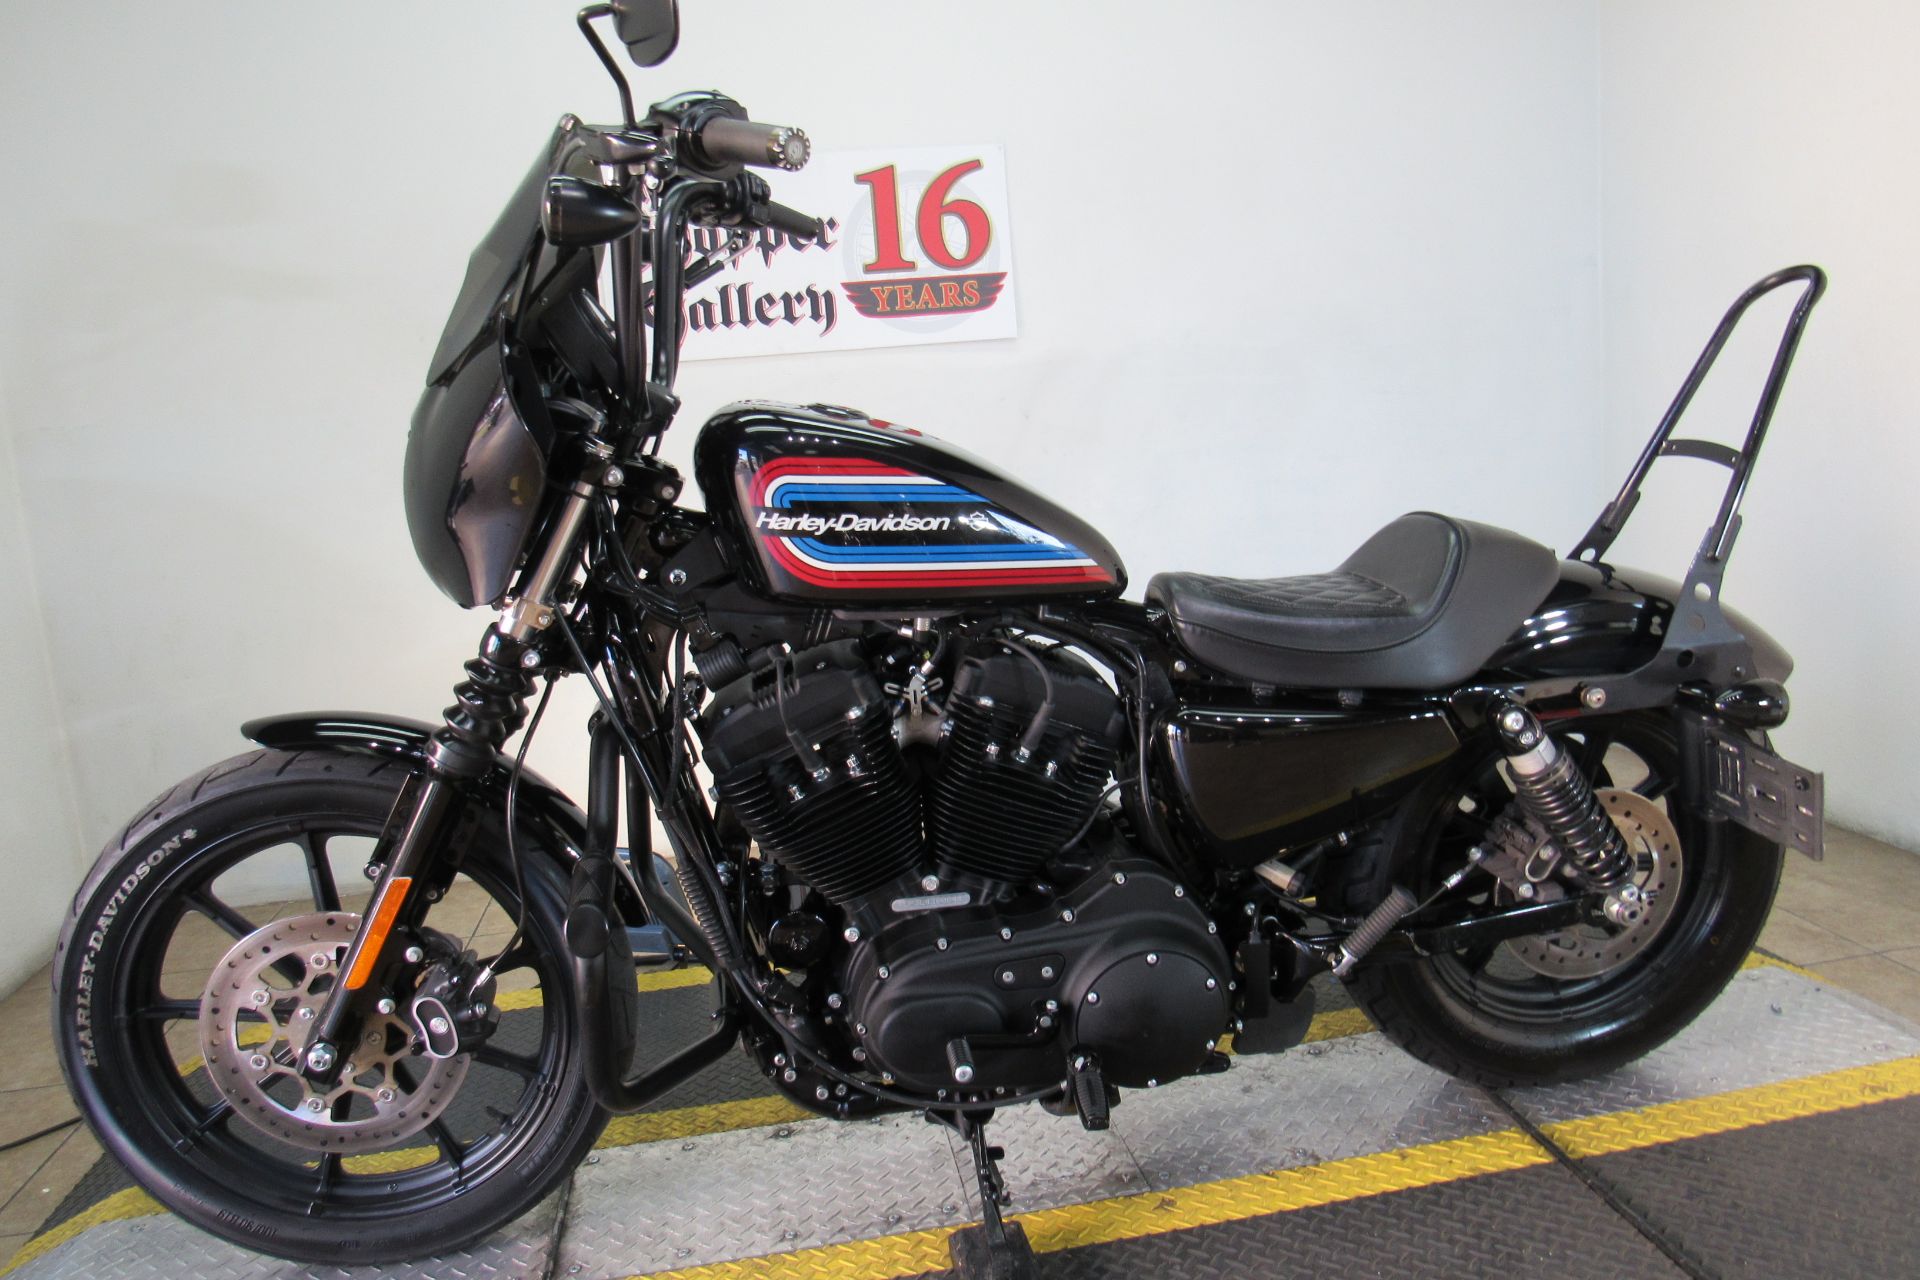 2020 Harley-Davidson Iron 1200™ in Temecula, California - Photo 8